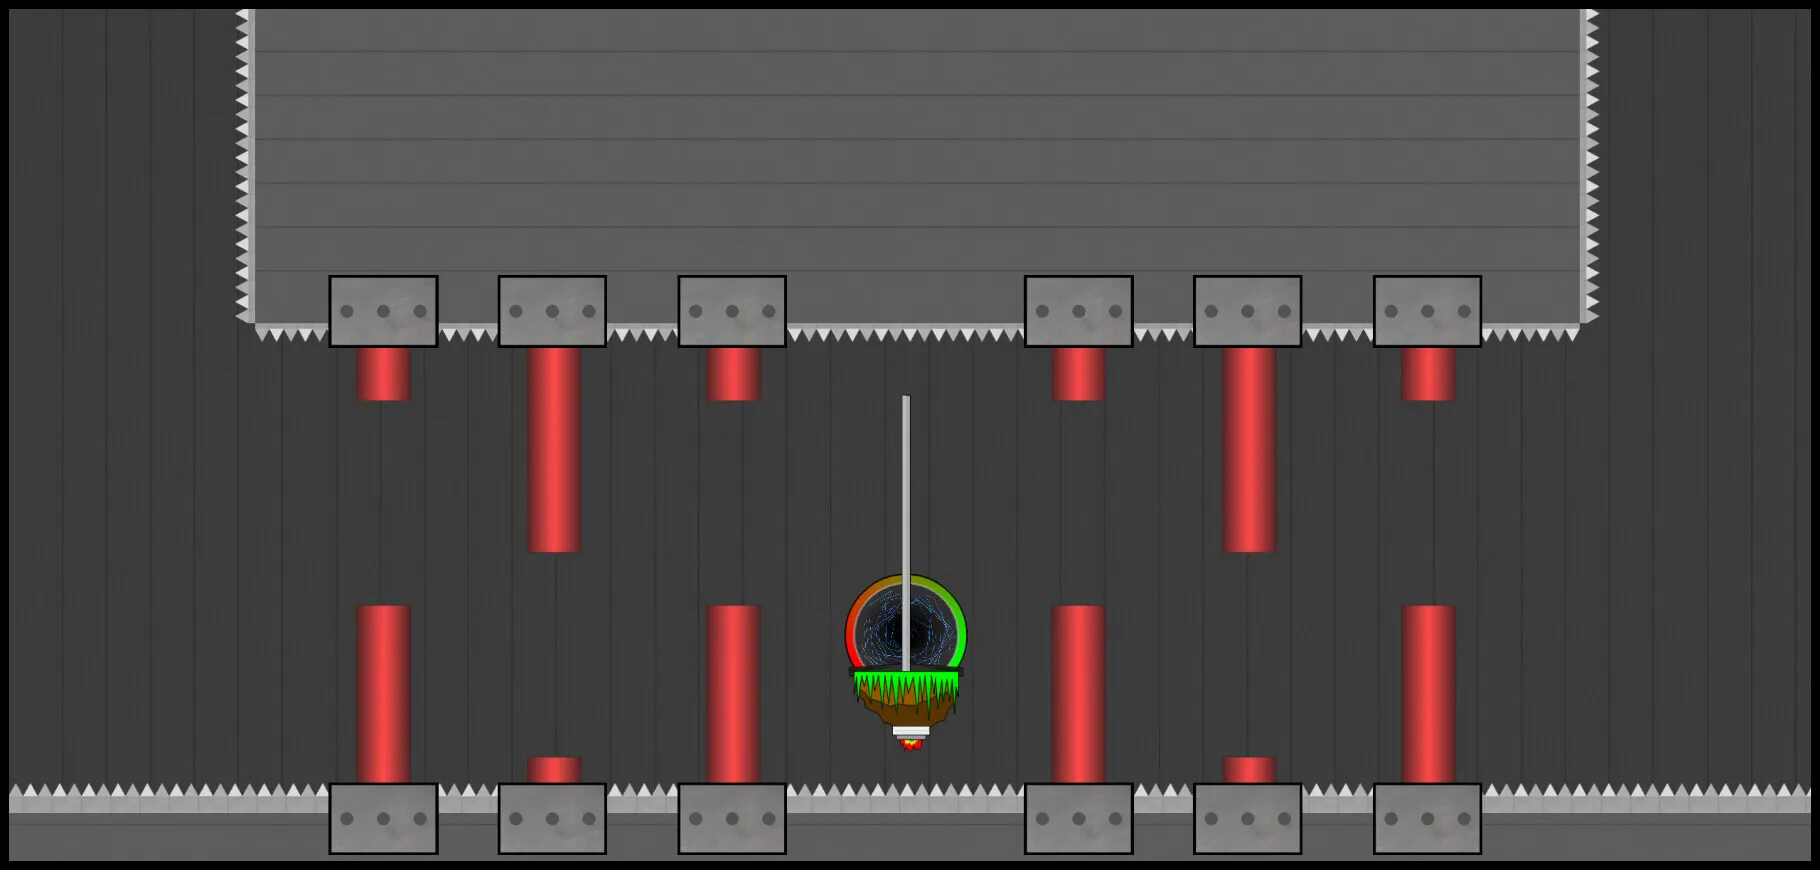 stair stepper level screenshot from the game reflex runner.